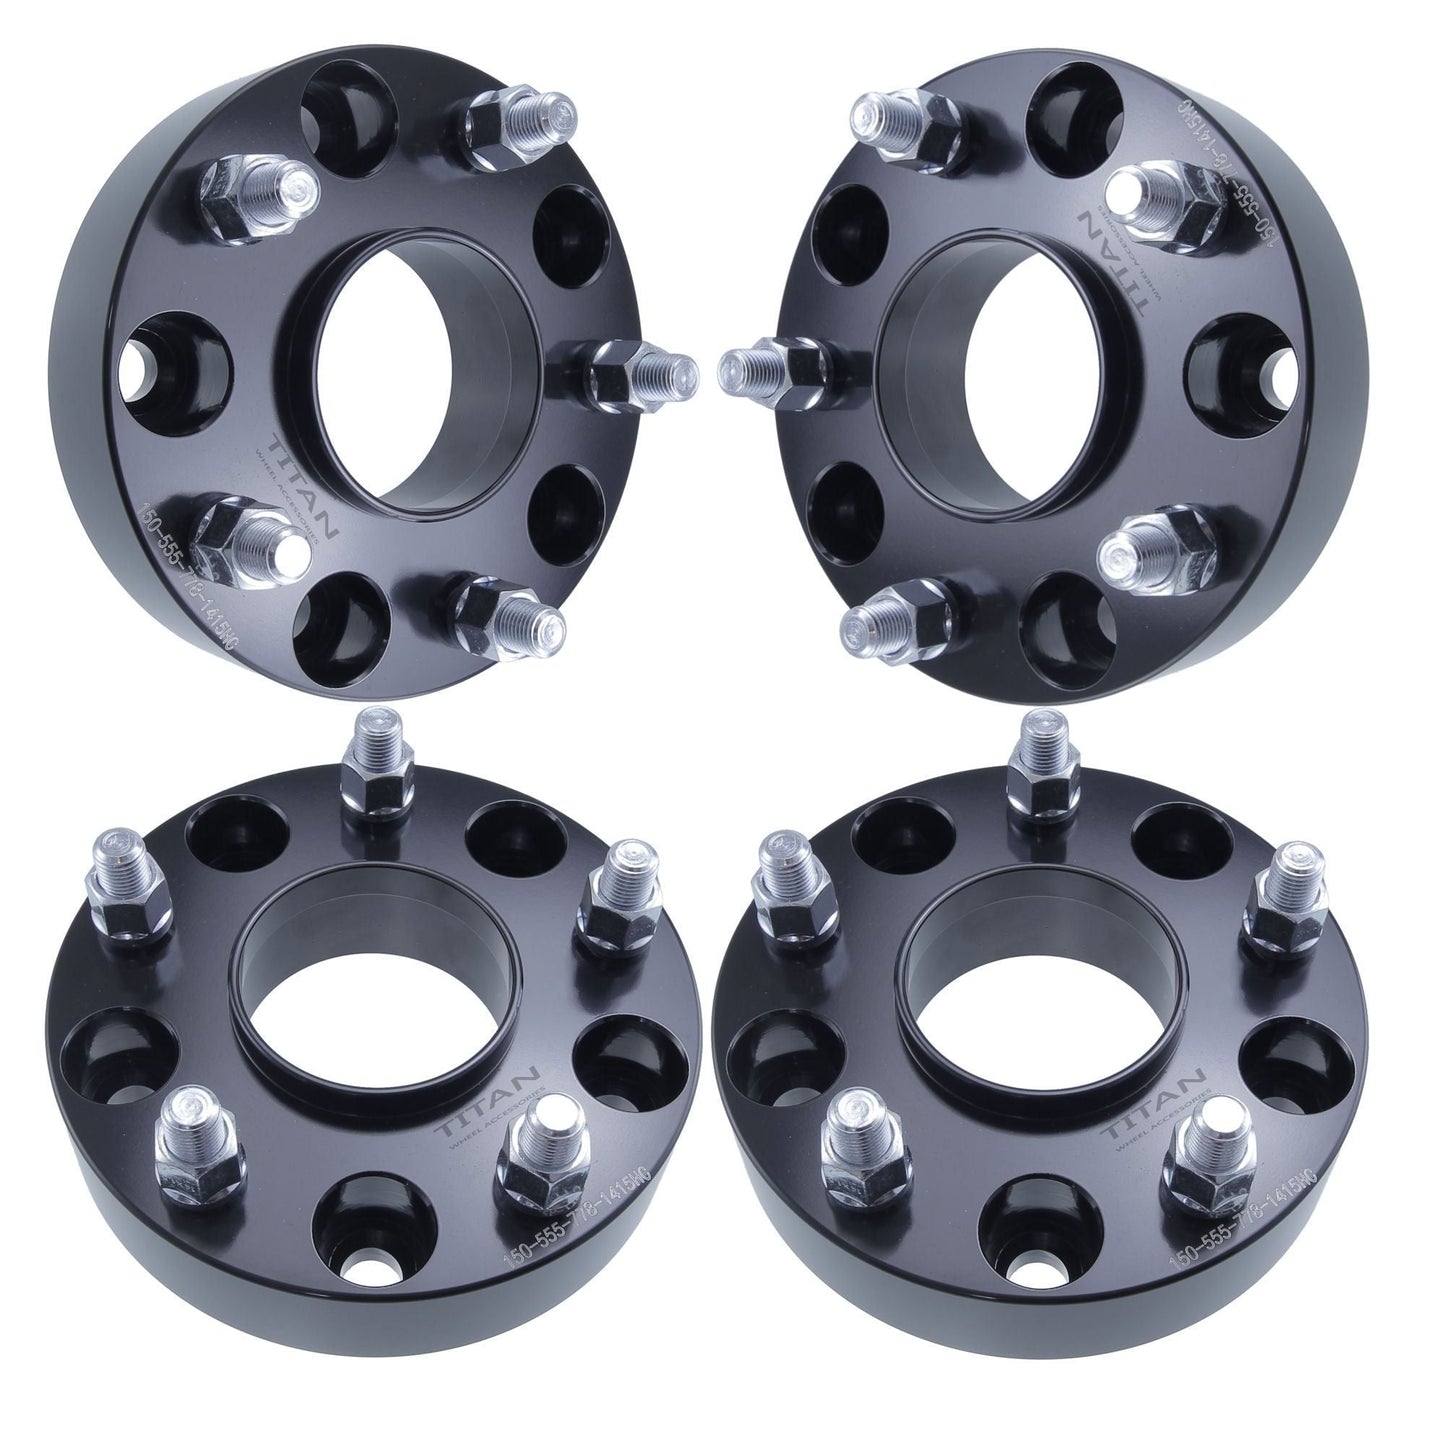 1.5" (38mm) Titan Wheel Spacers for Ram 1500 | 5x5.5 (5x139.7) | 77.8 Hubcentric |14x1.5 Studs |  Set of 4 | Titan Wheel Accessories